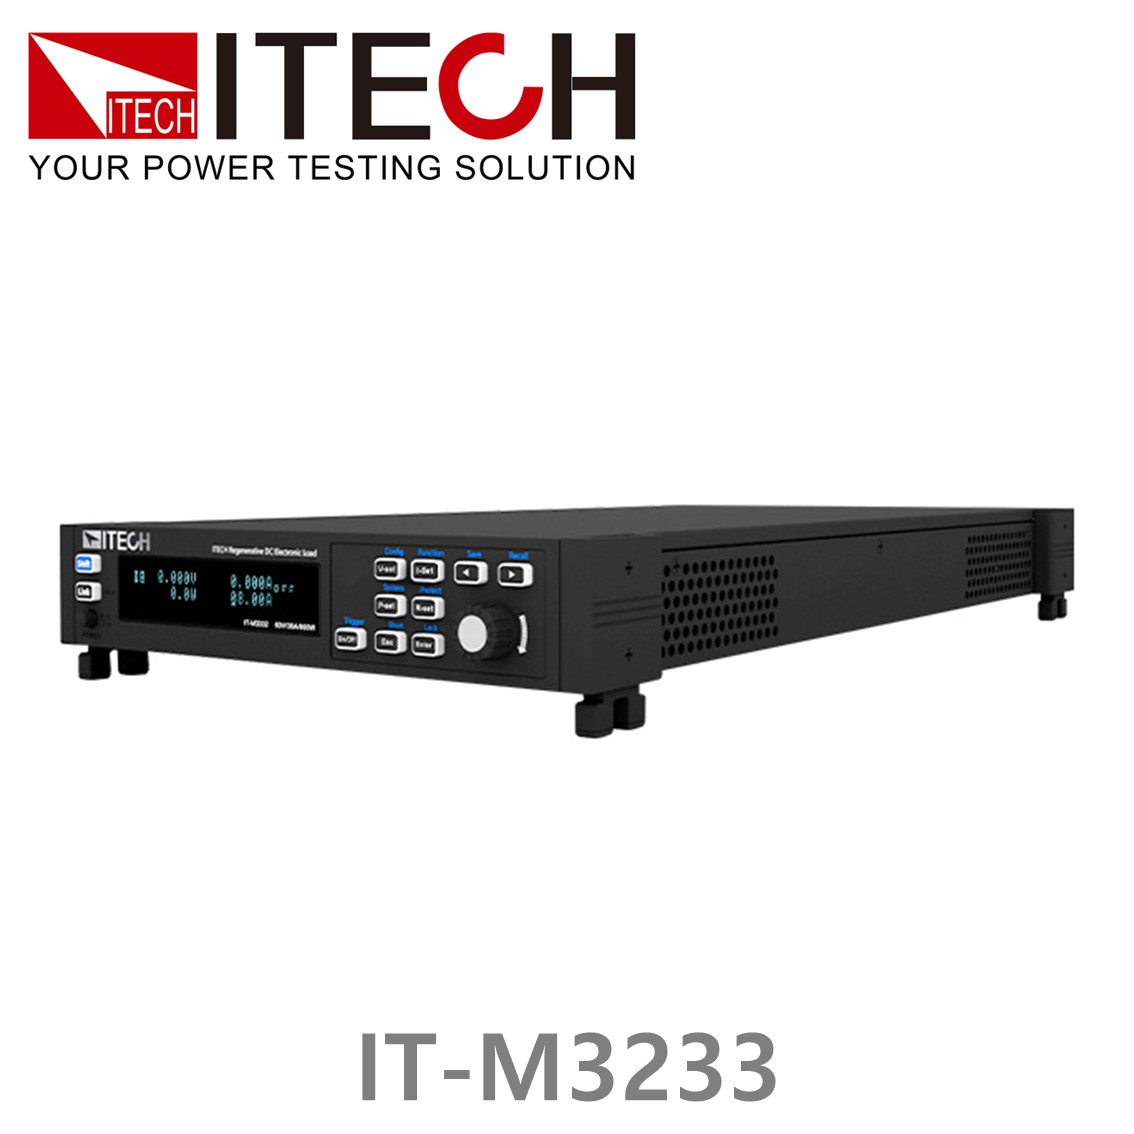 [ ITECH ] IT-M3233 고정밀 DC파워서플라이 60V/10A/200W DC전원공급기